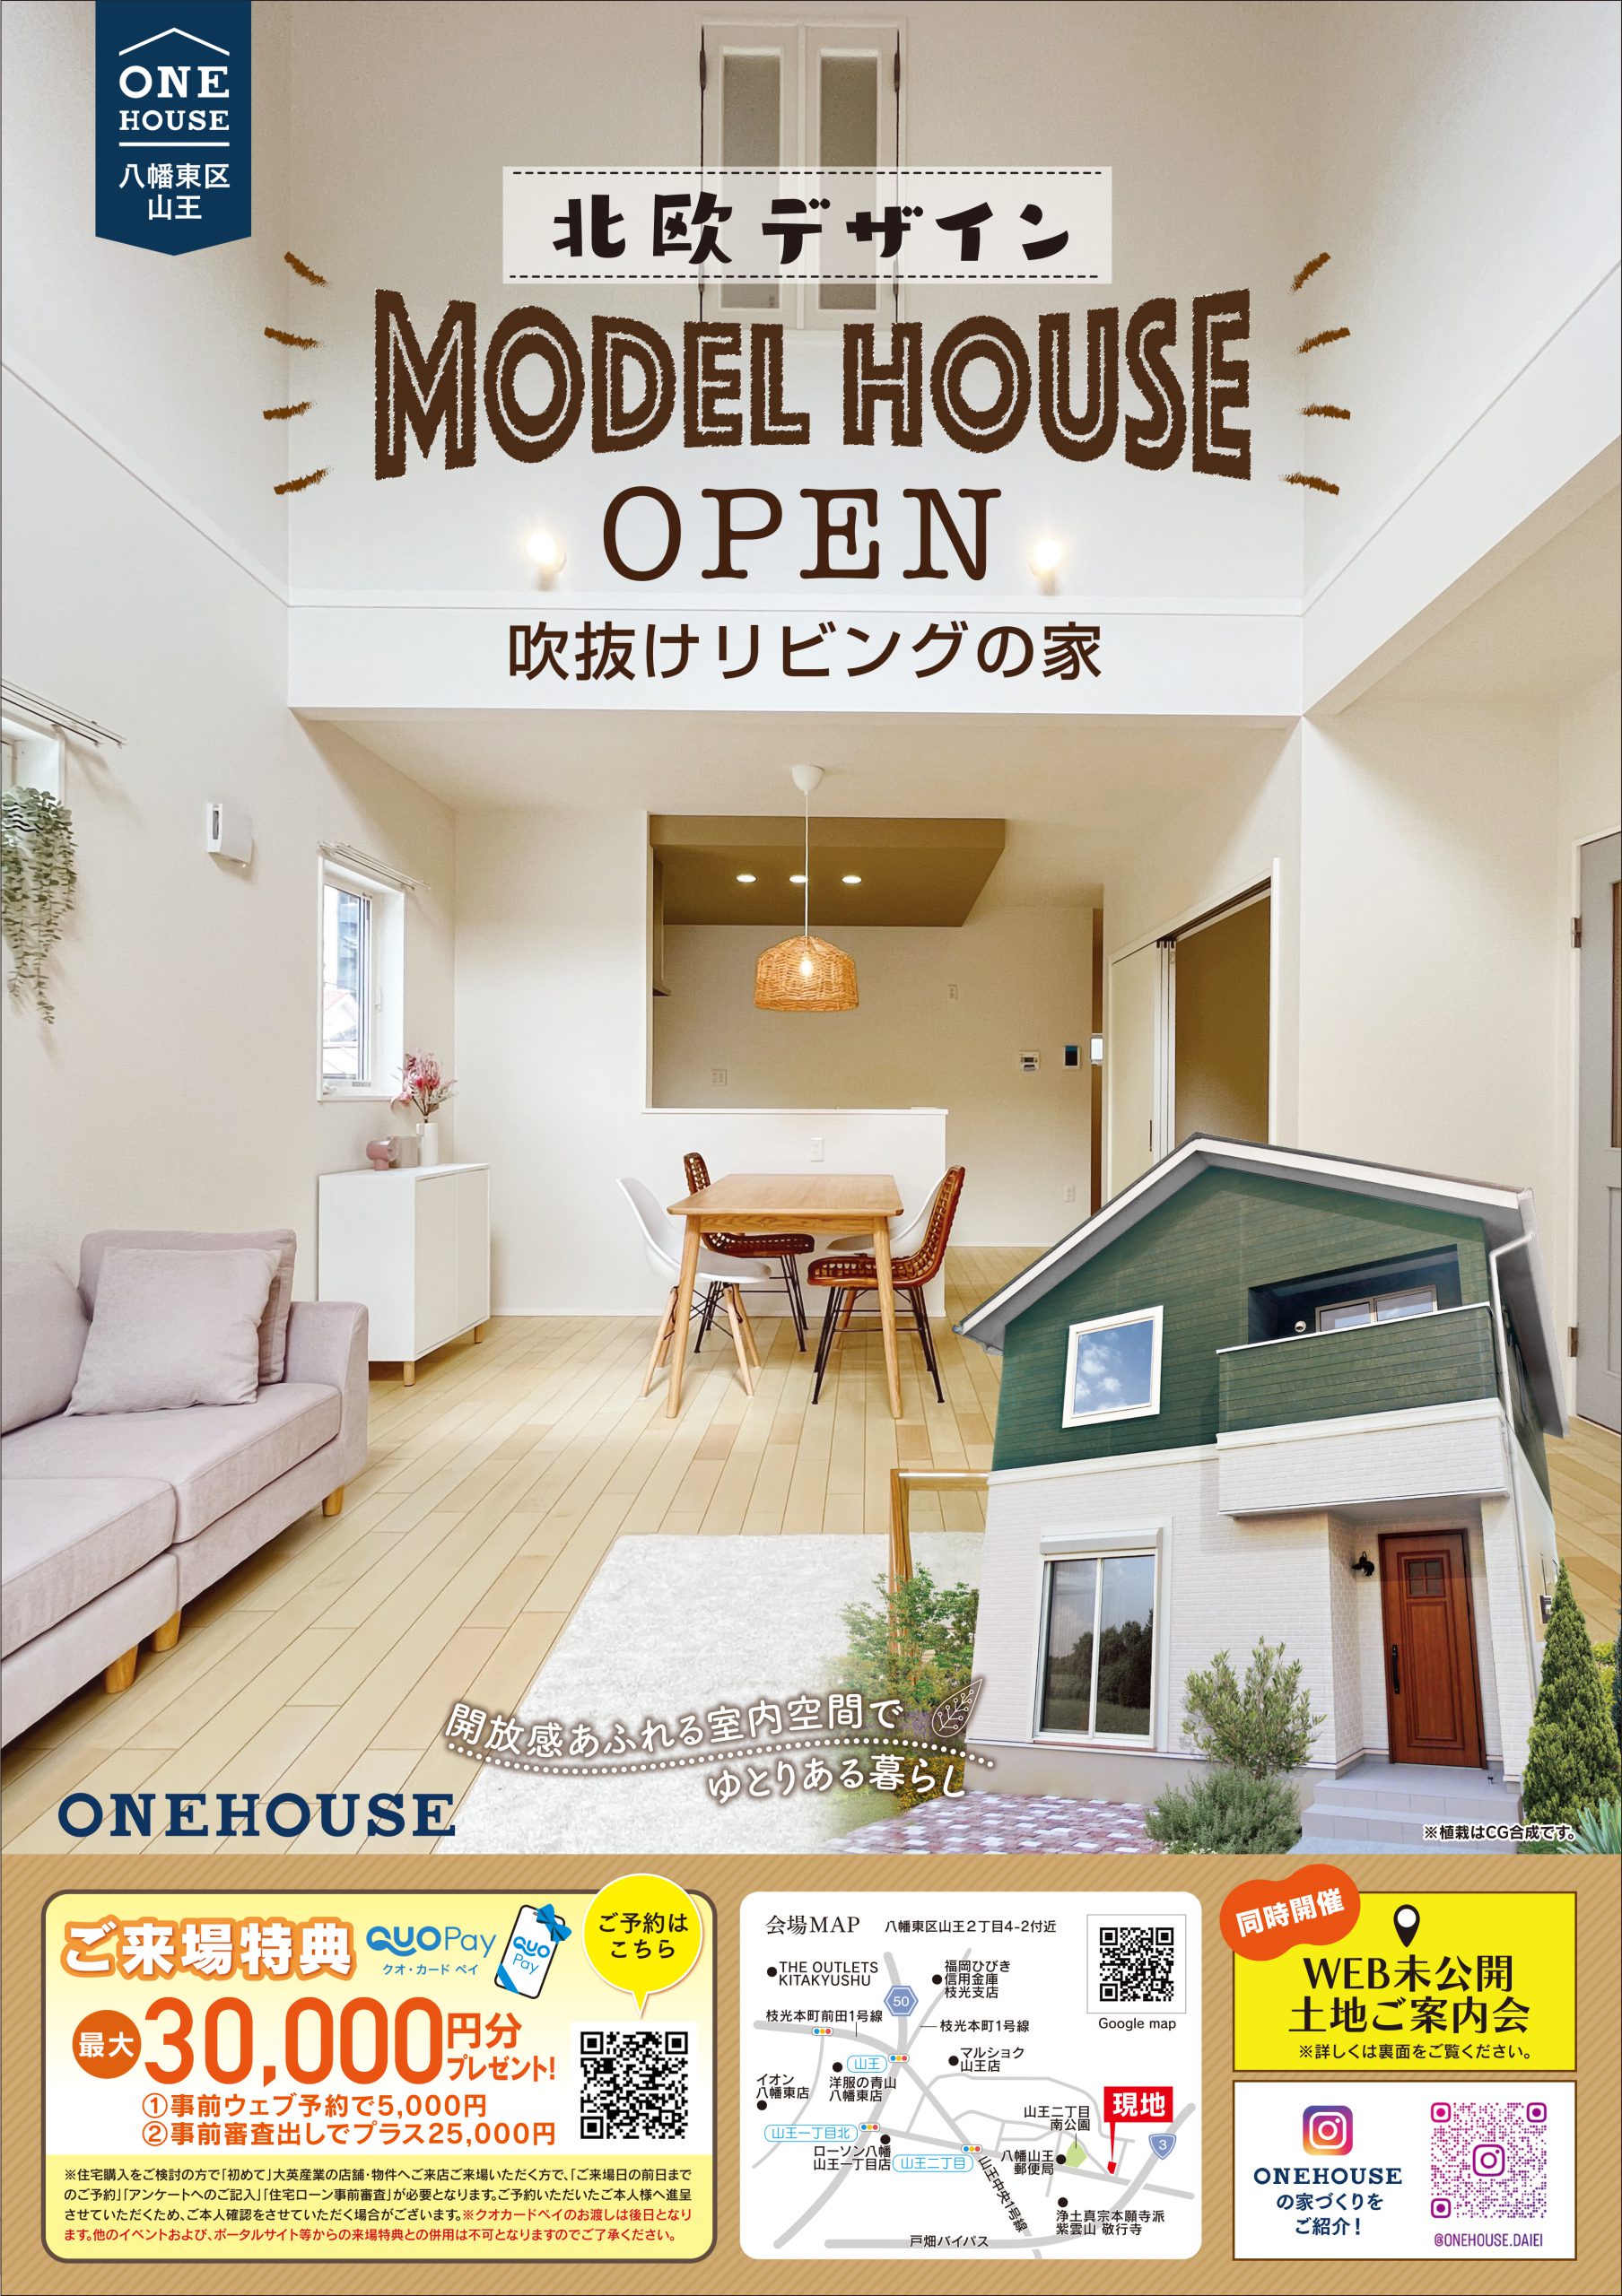 ONEHOUSE 北欧デザイン MODEL HOUSE OPEN